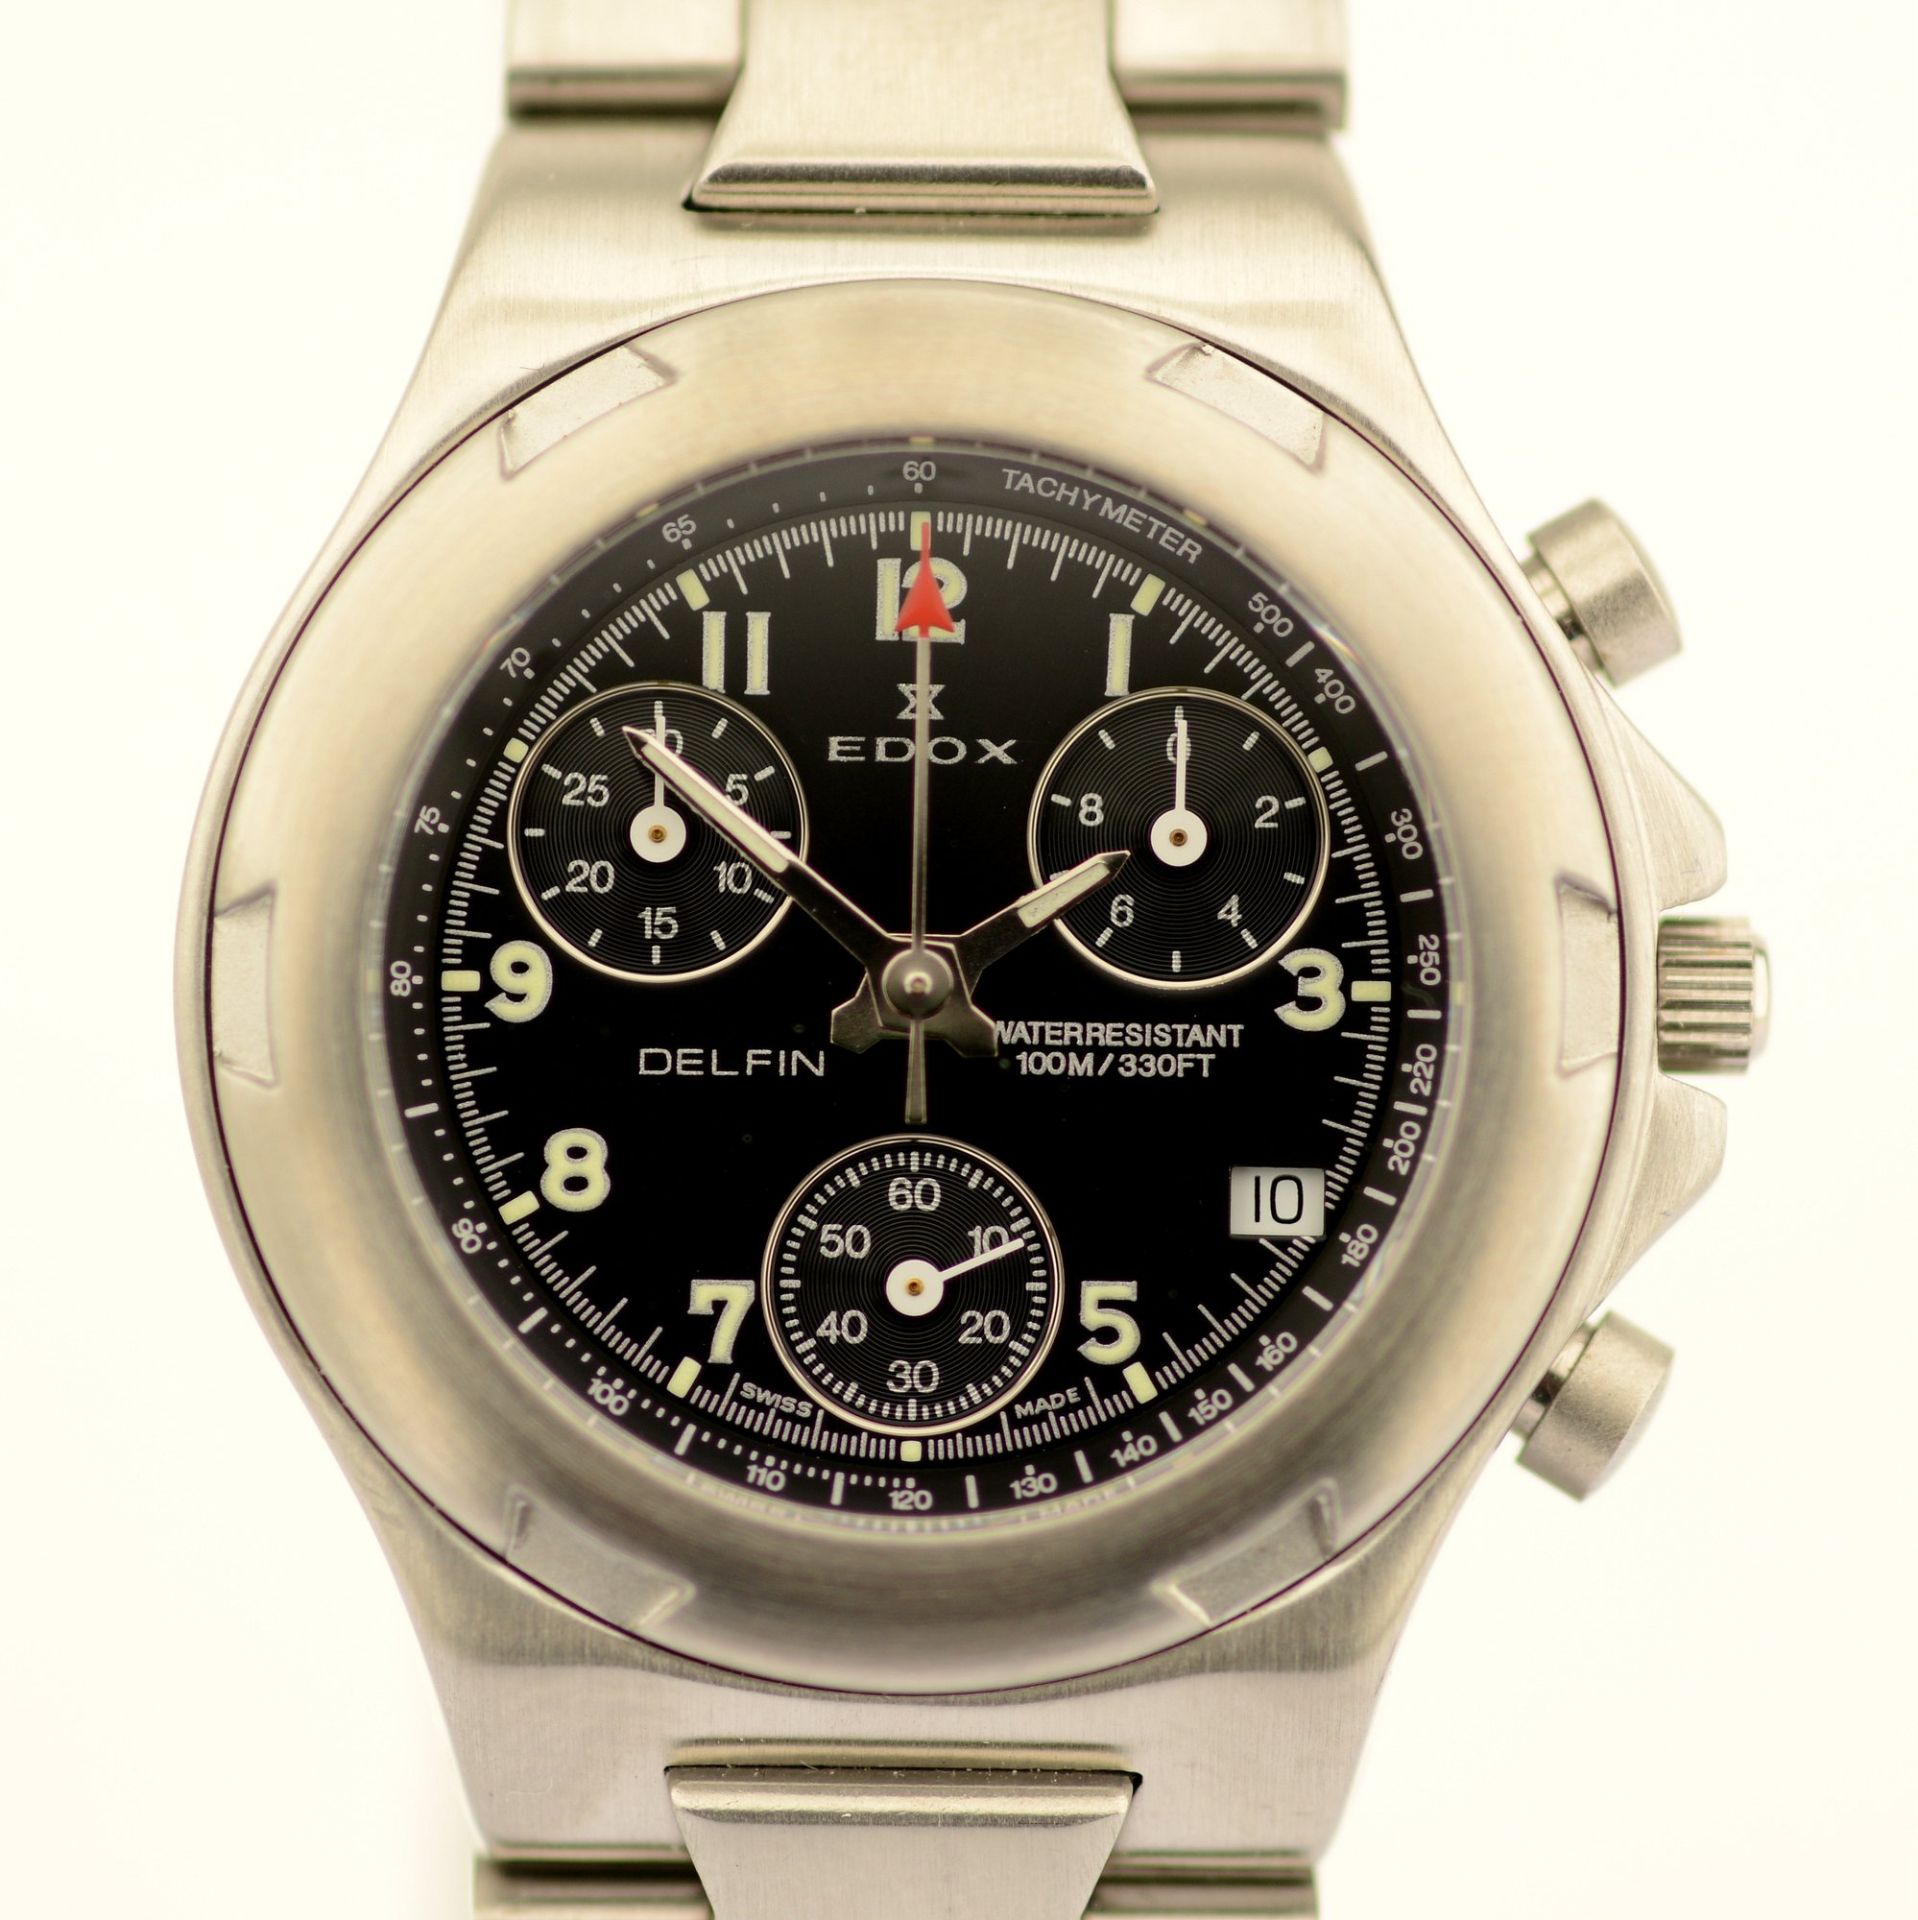 Edox / Delfin Chronograph - (Unworn) Lady's Steel Wrist Watch - Image 6 of 7